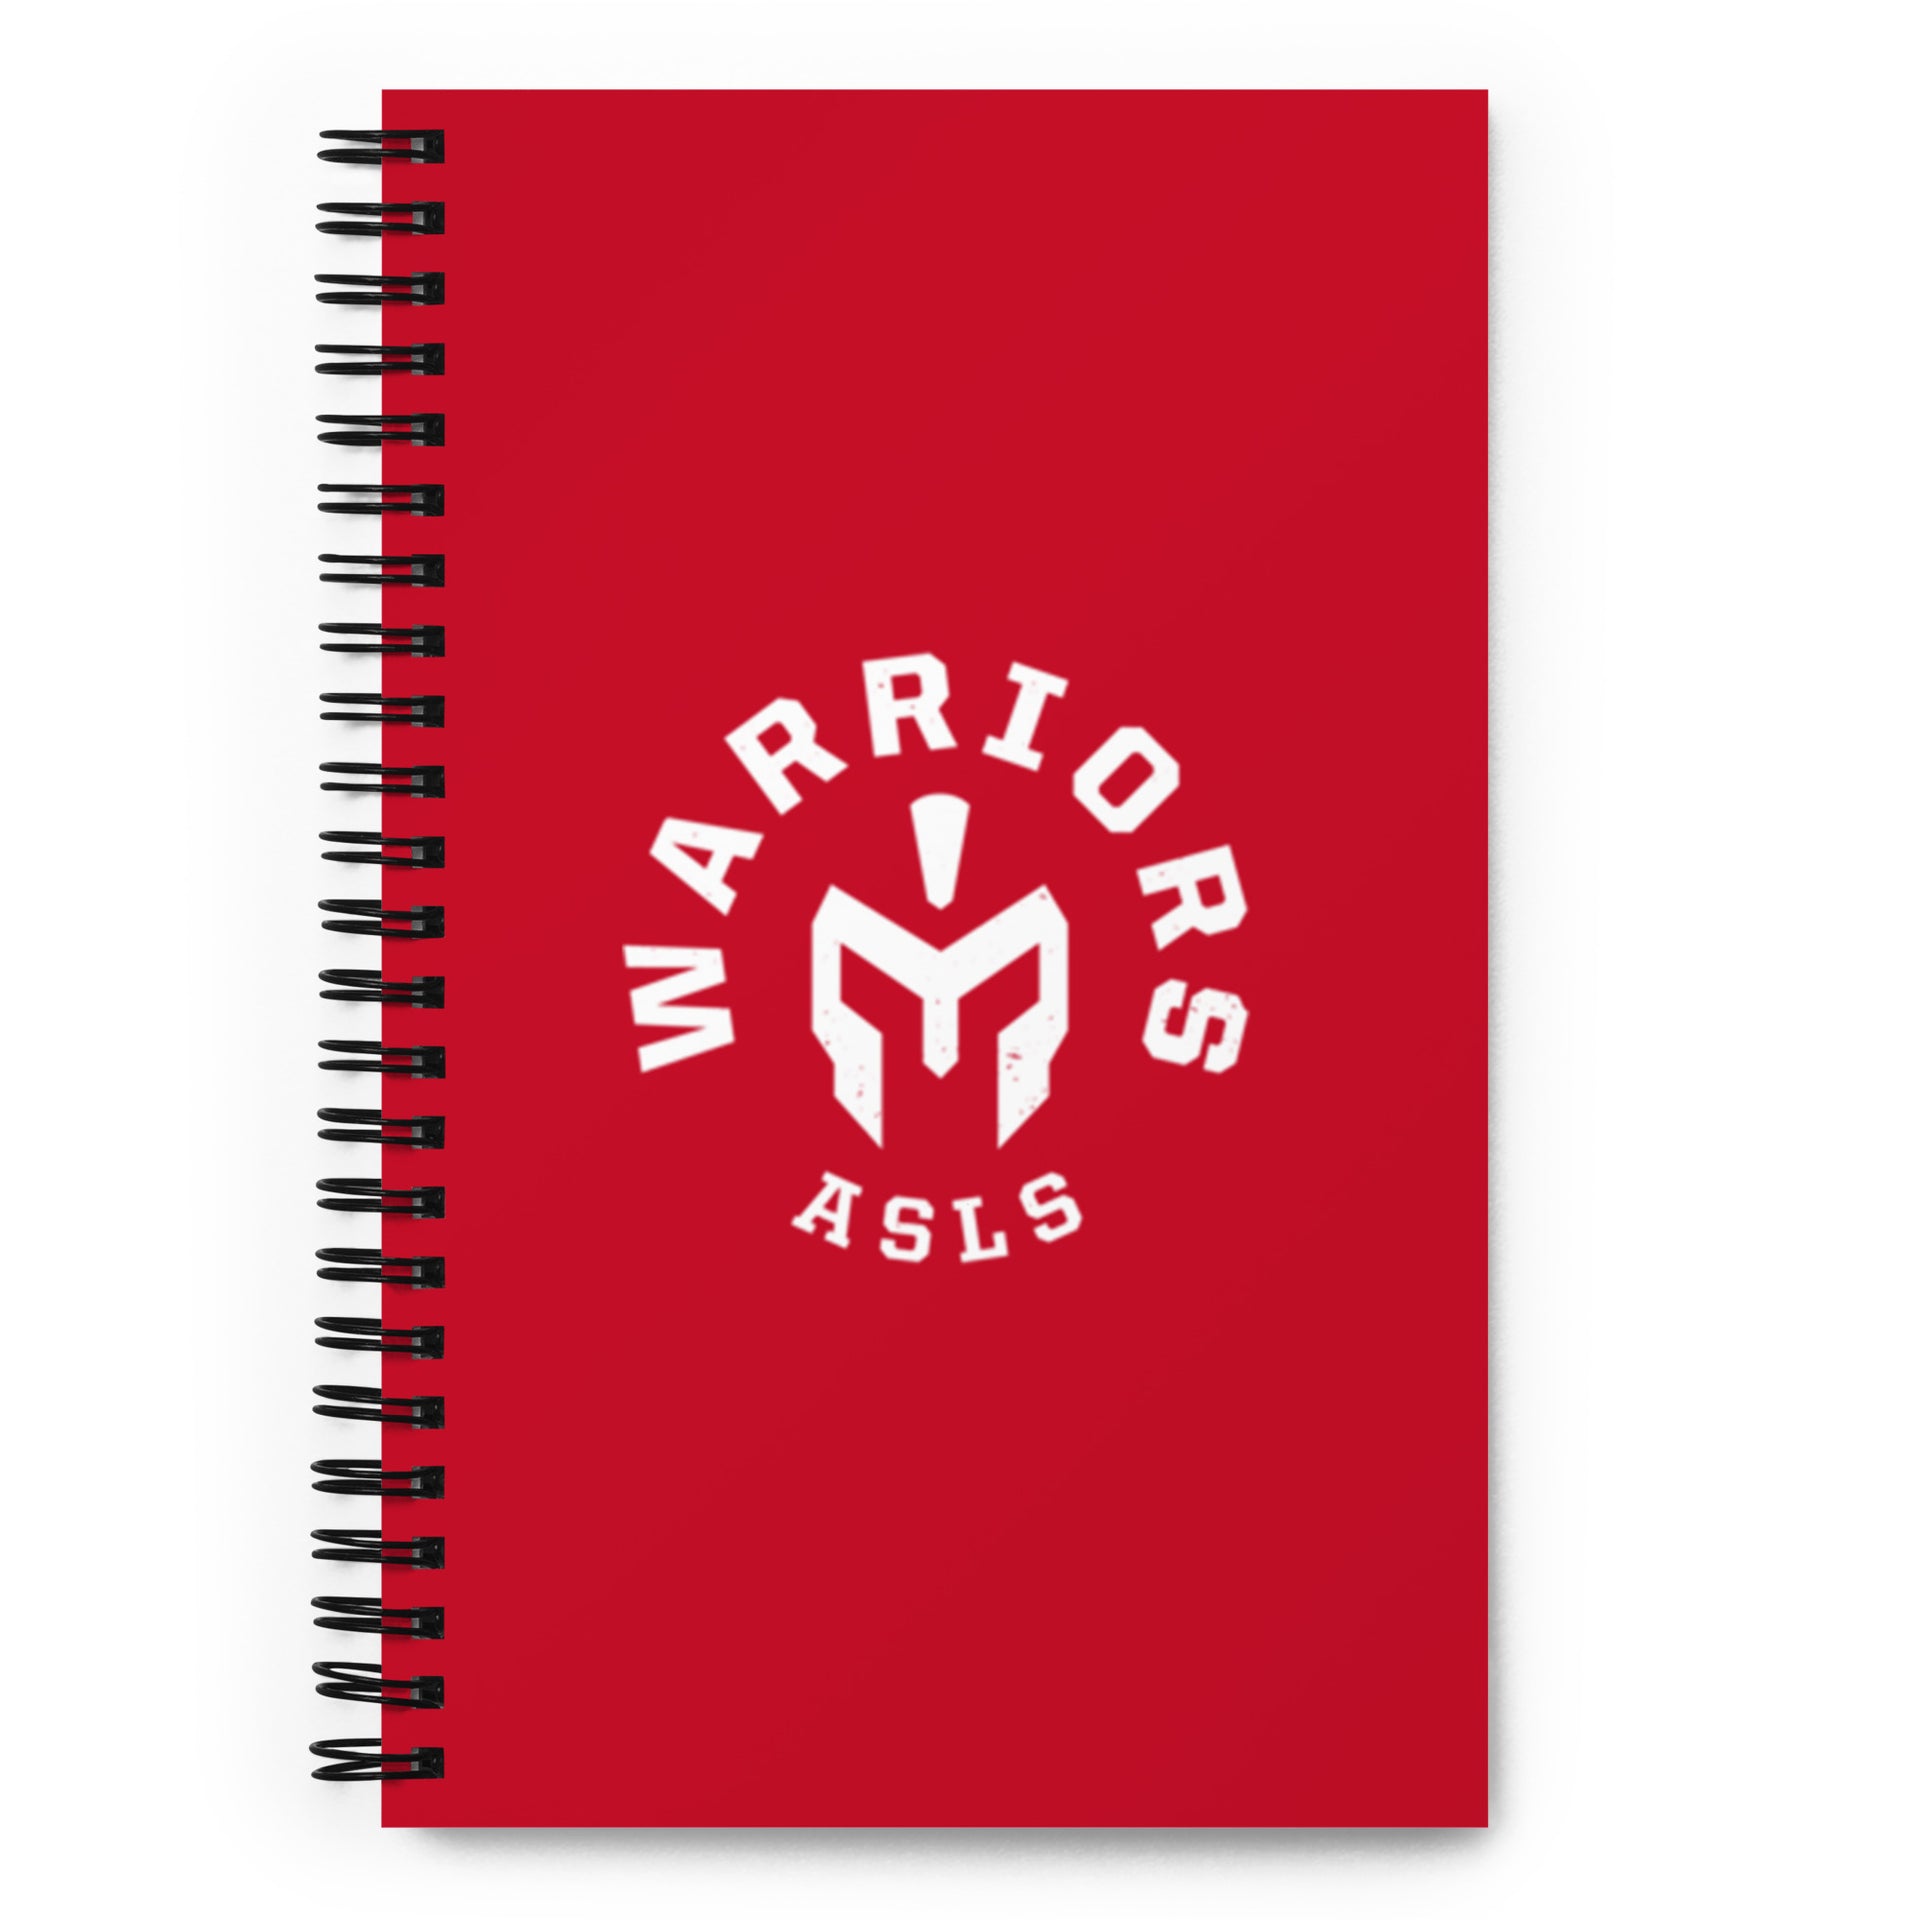 ASLS Warrior Spiral notebook